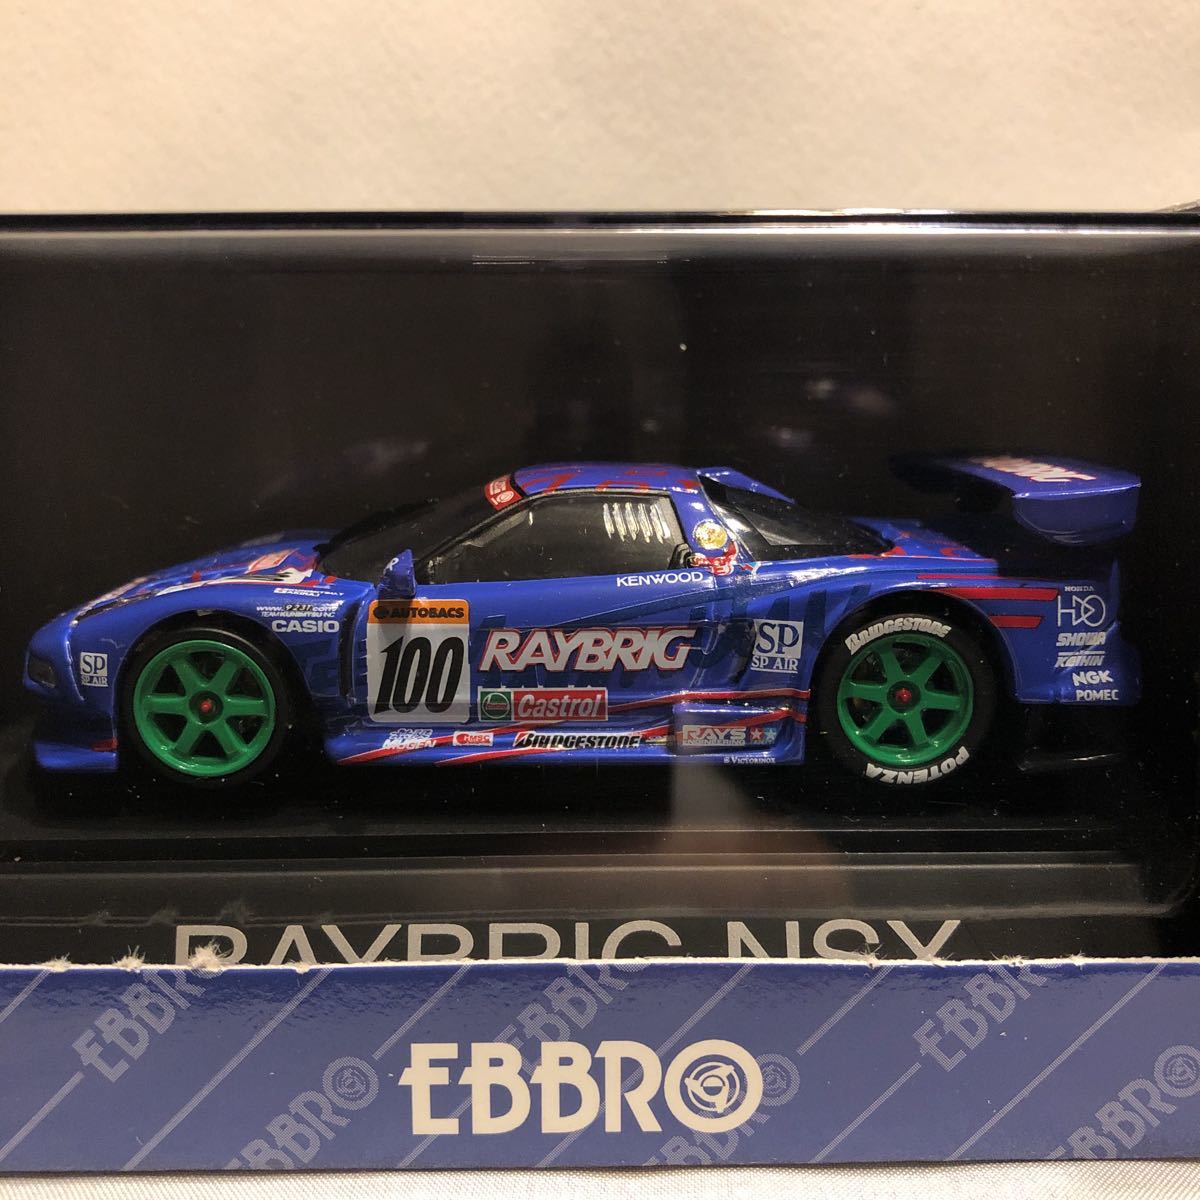 EBBRO 1/43 RAYBRIG NSX #100 1999年 HONDA NSX JGTC ホンダ 青色 ブルー エブロ ミニカー モデルカー 旧車 '99 スーパーGT 國光の画像5